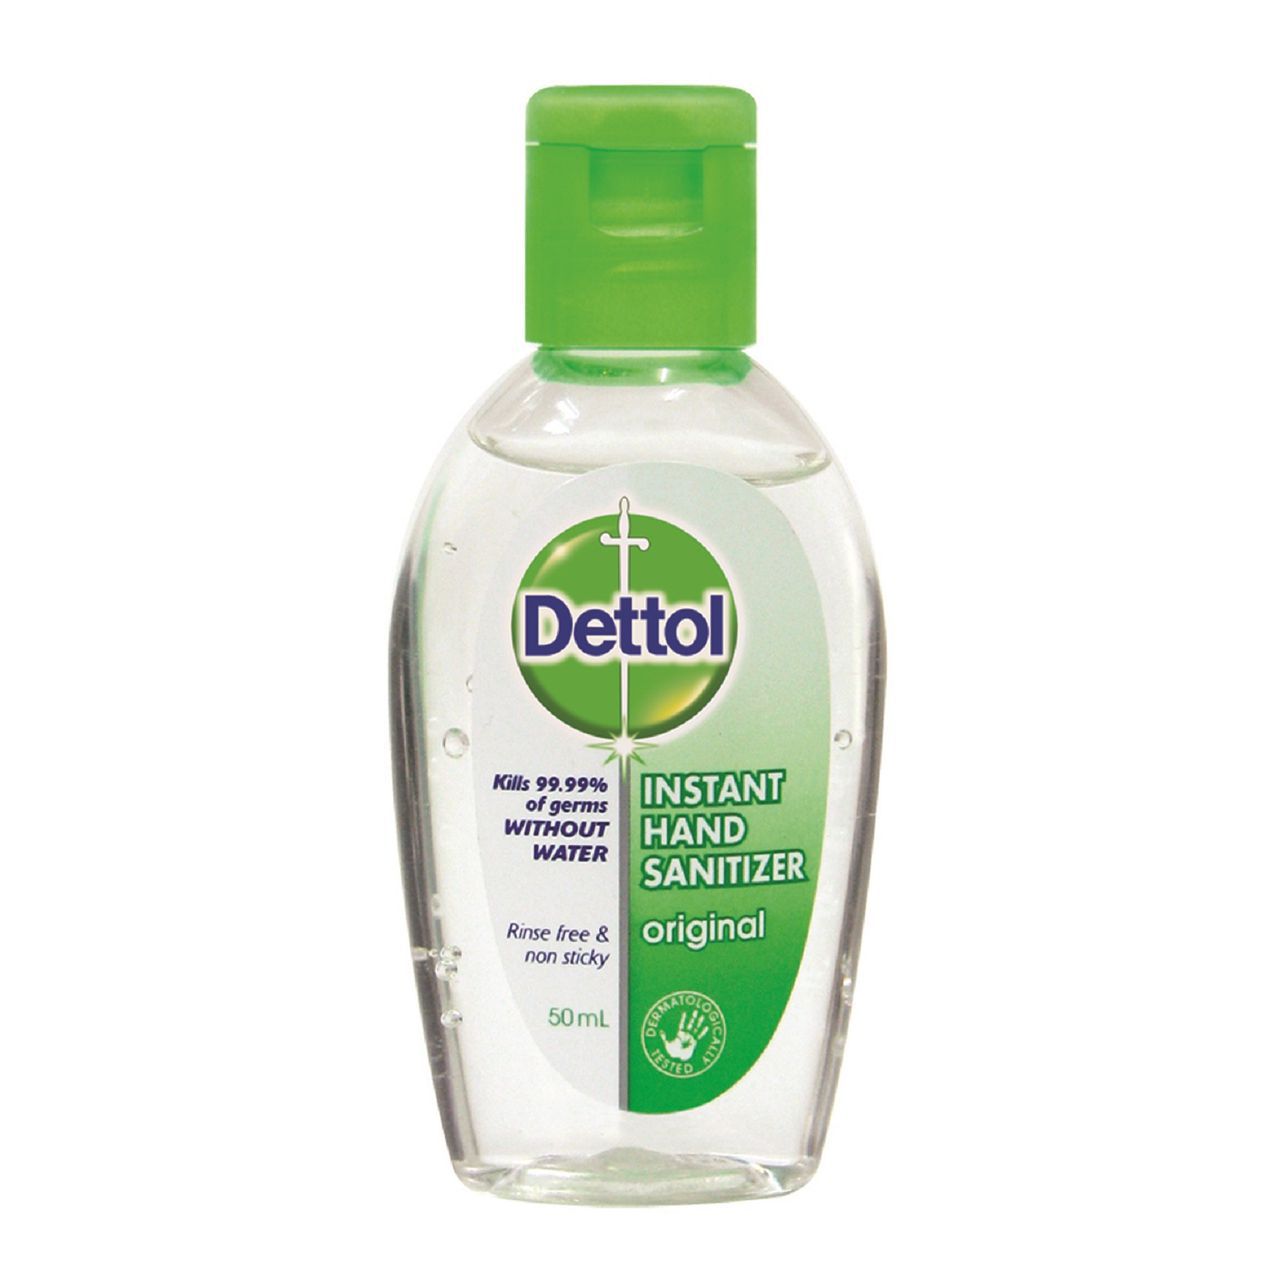 DETTOL Instant Hand Sanitizer 50ml